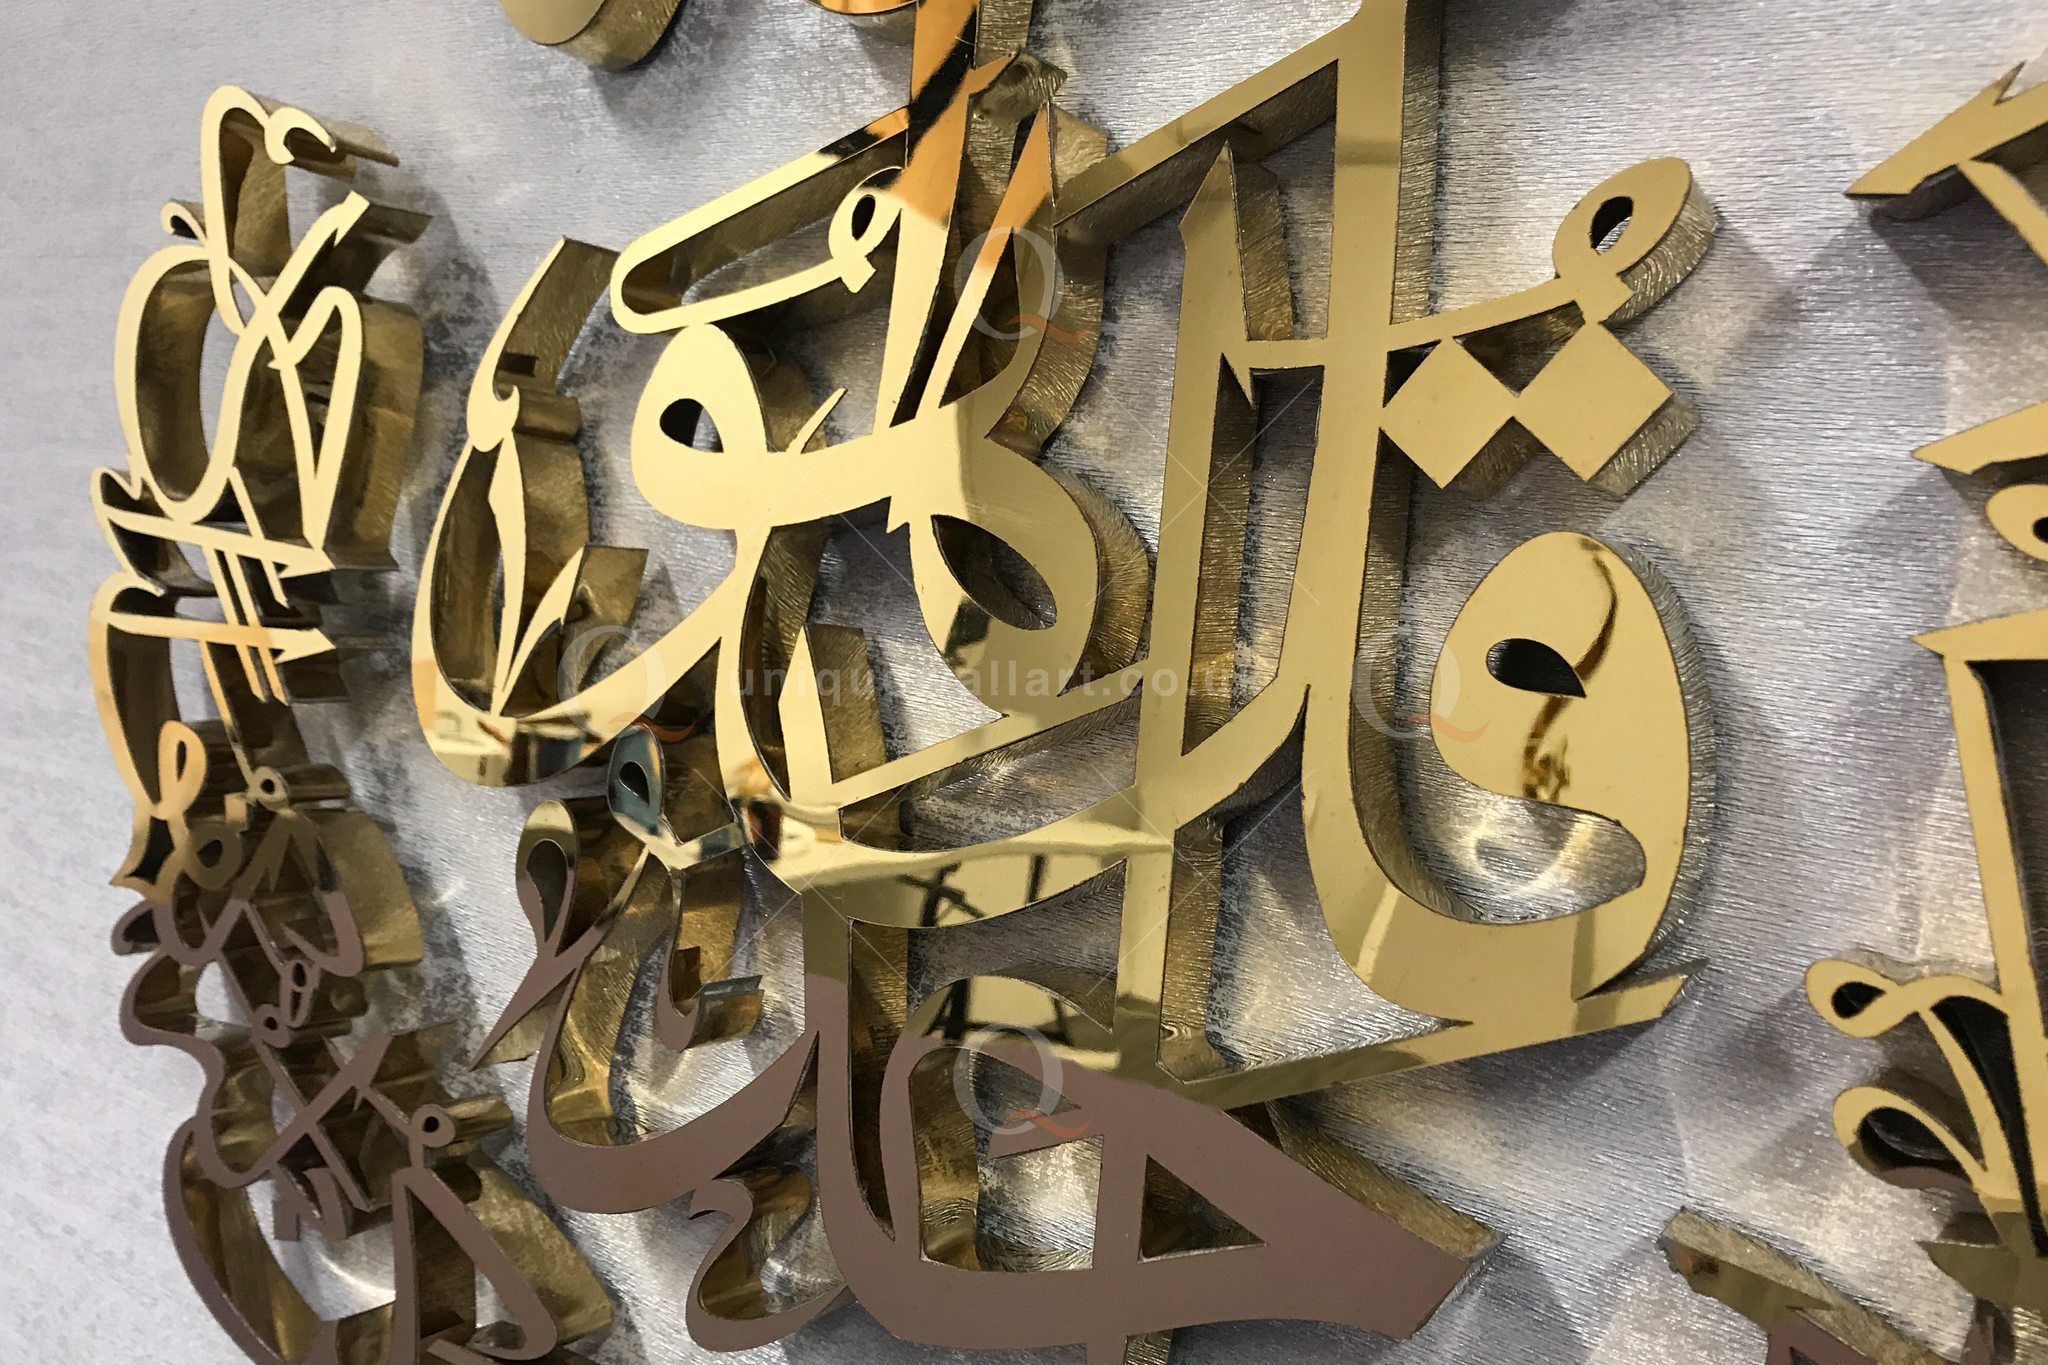 3D Surah Ikhlas Arabic Calligraphy Wall Art